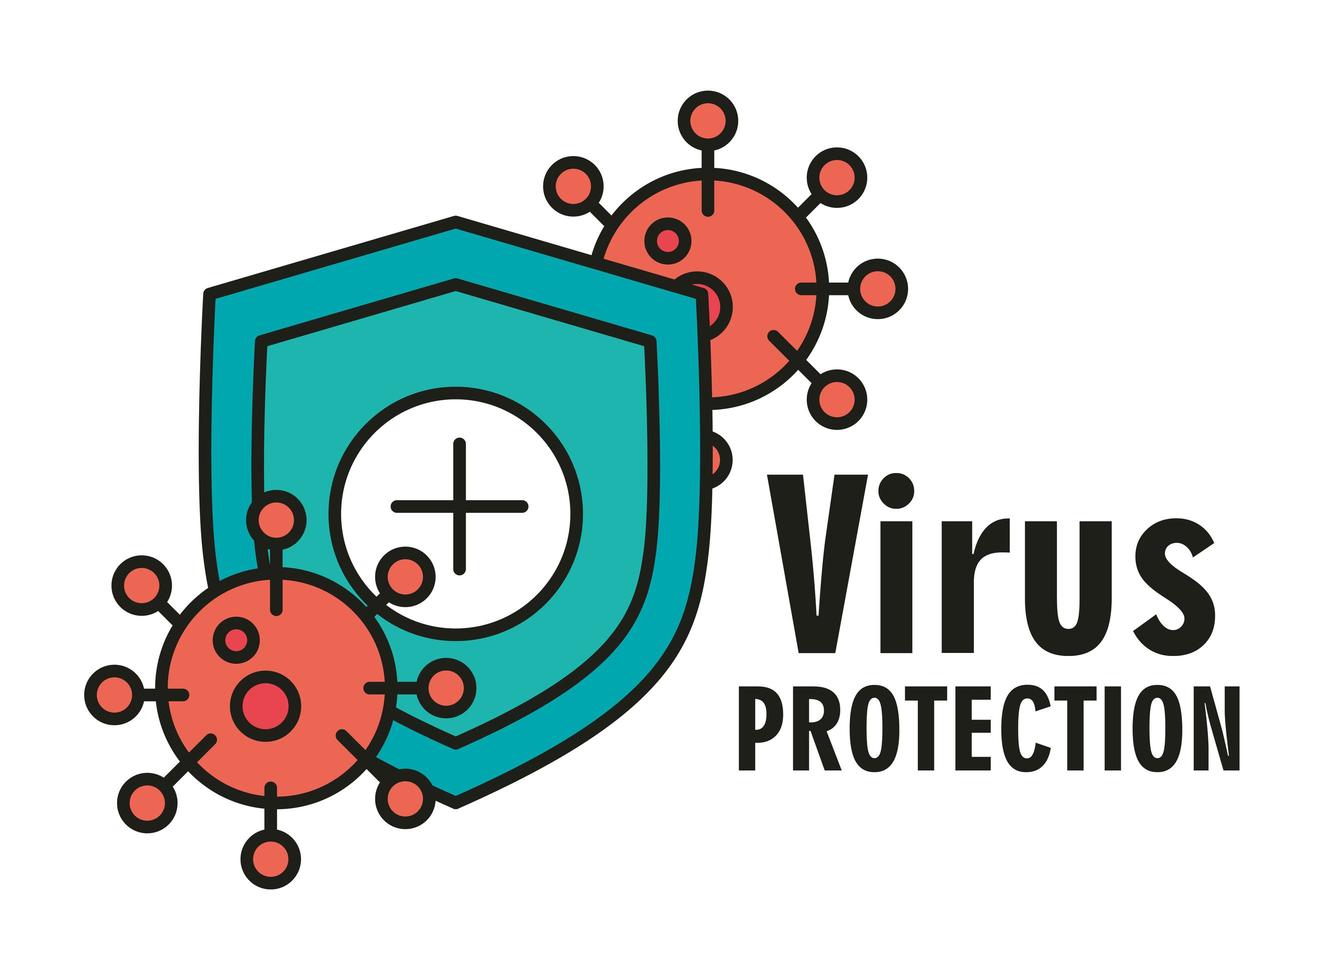 Coronavirus-Schutz mit Schildsymbol vektor